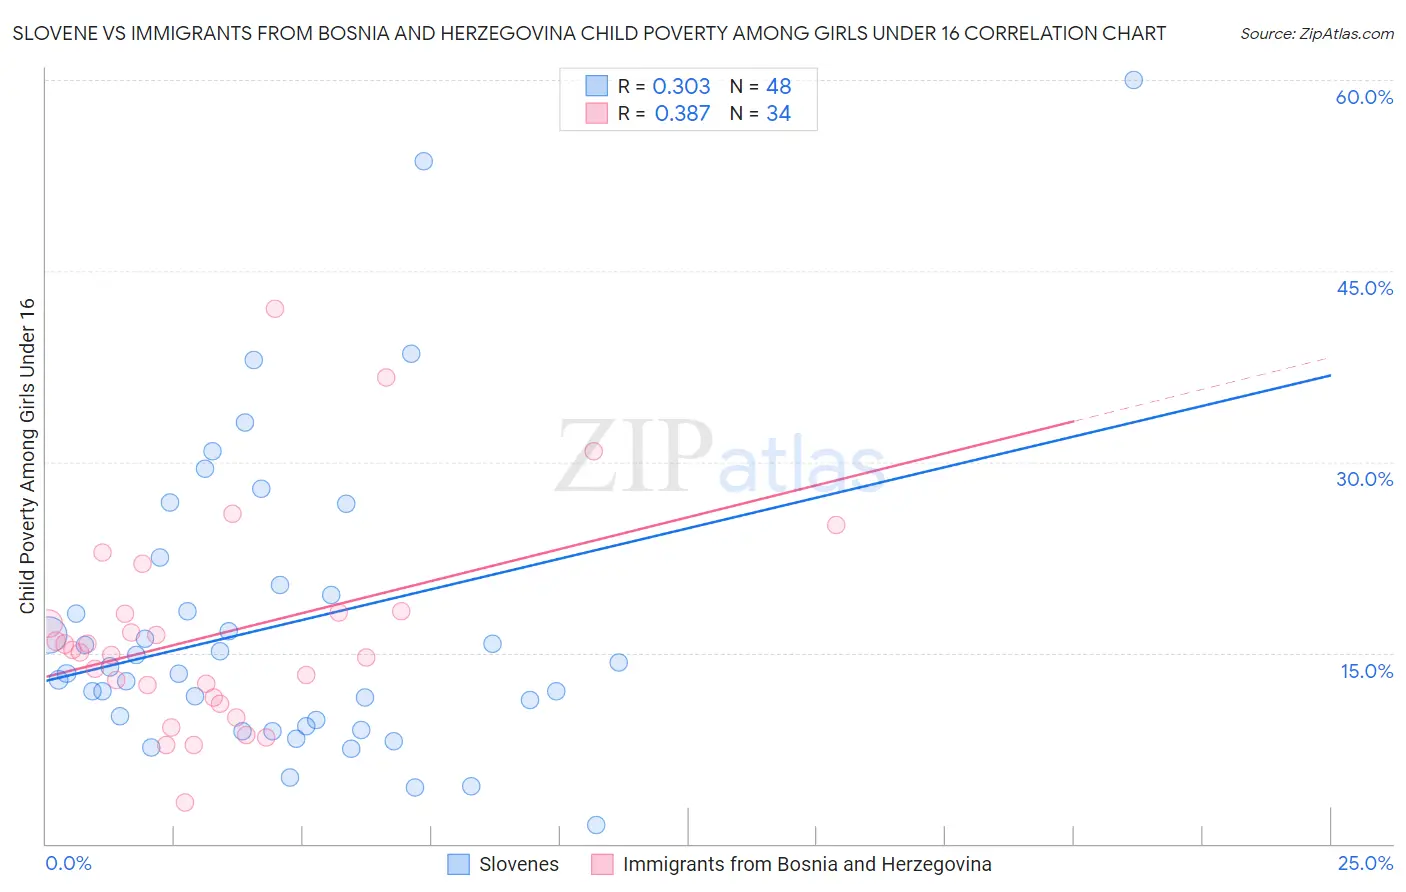 Slovene vs Immigrants from Bosnia and Herzegovina Child Poverty Among Girls Under 16